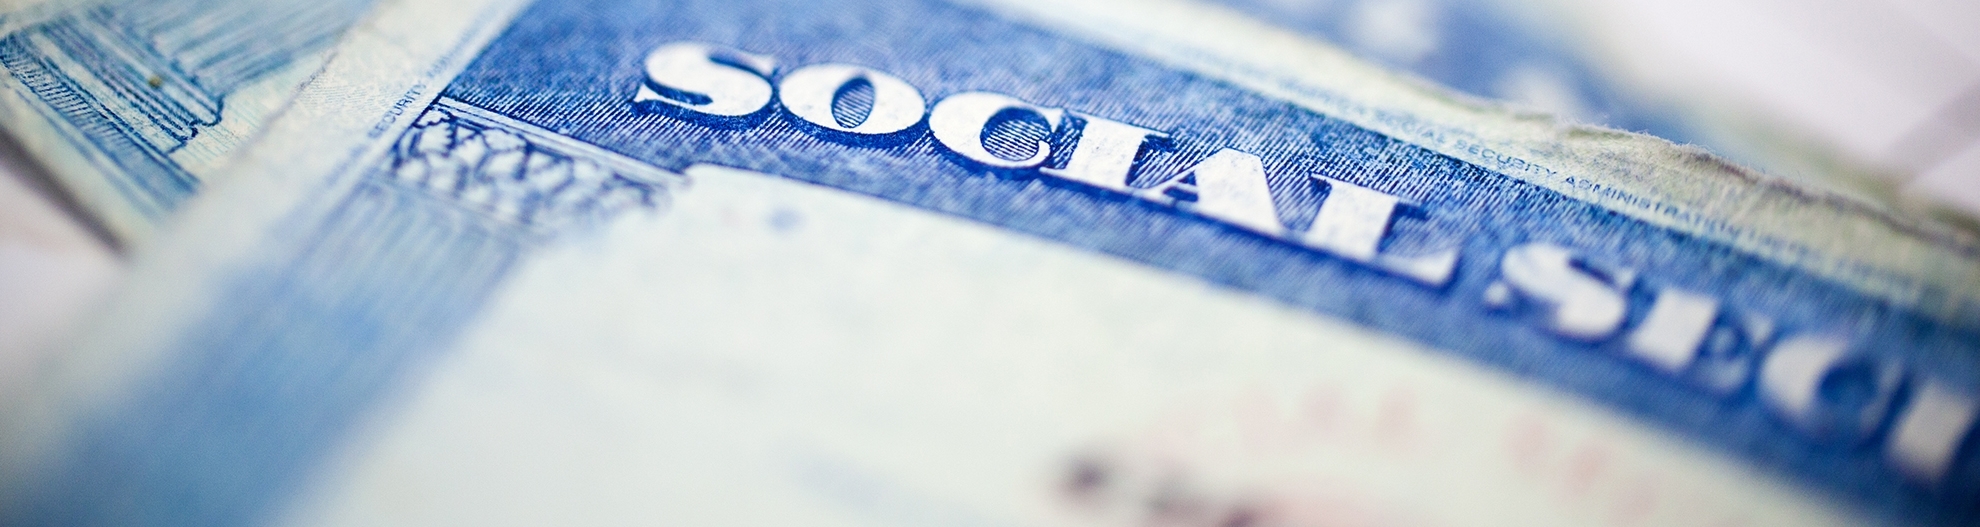 Close up image of a social security card